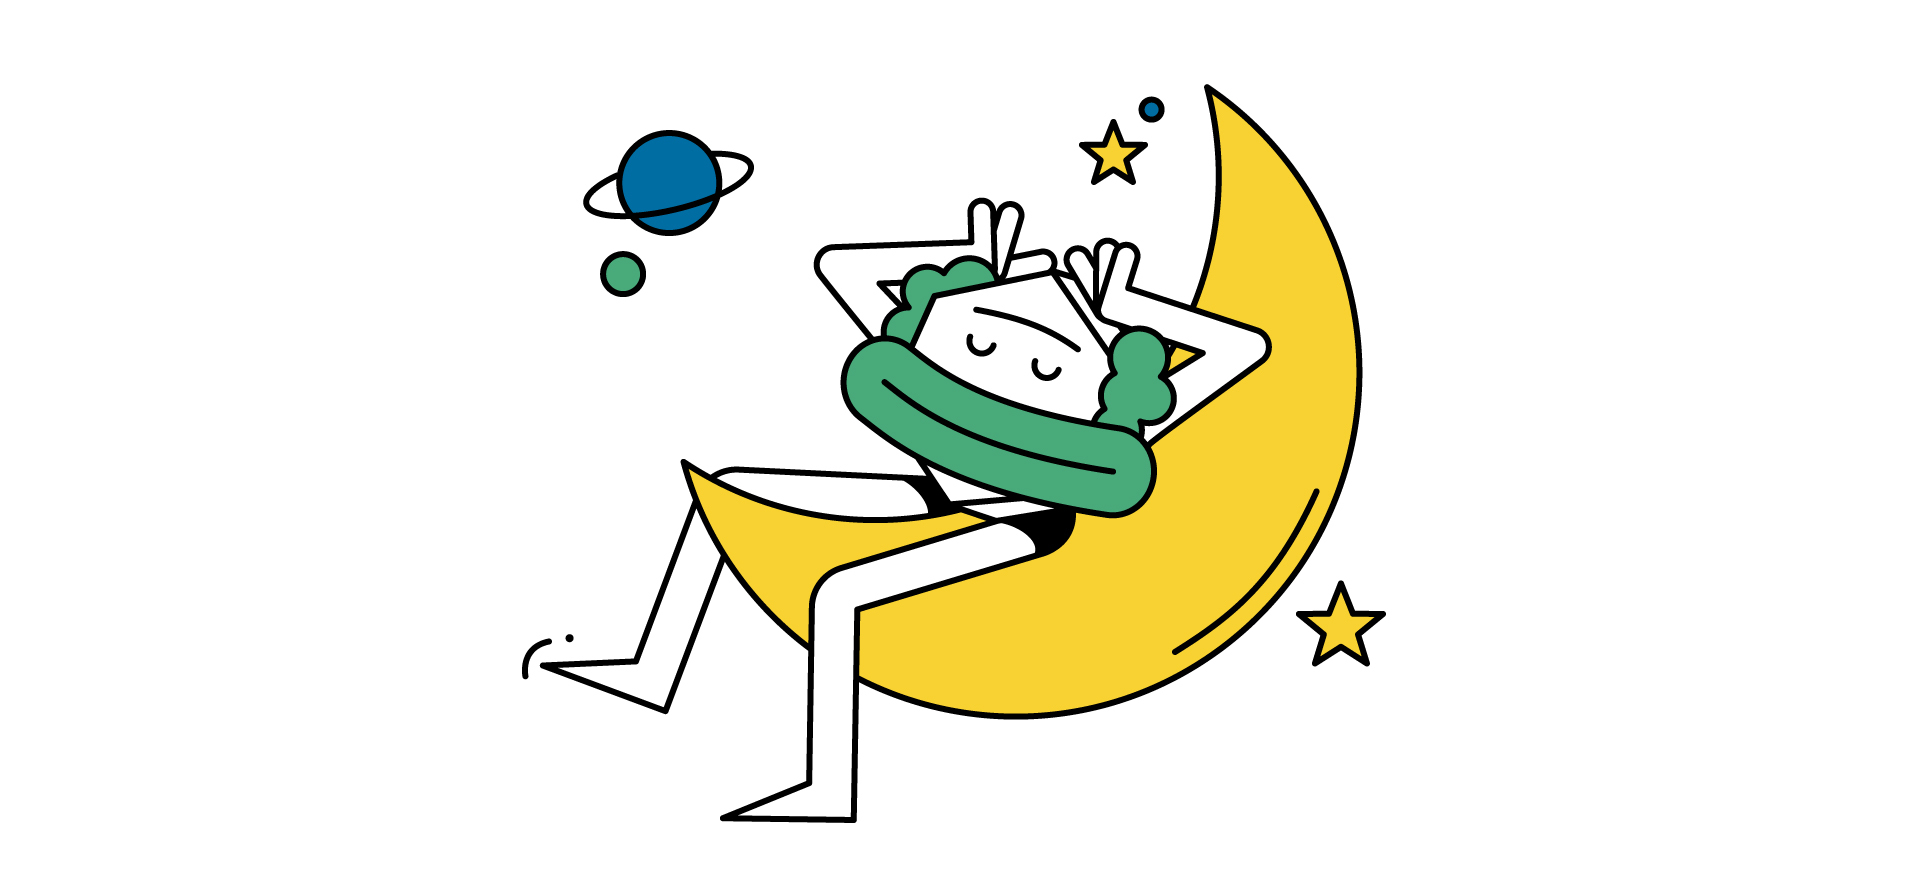 Illustration of someone sleeping